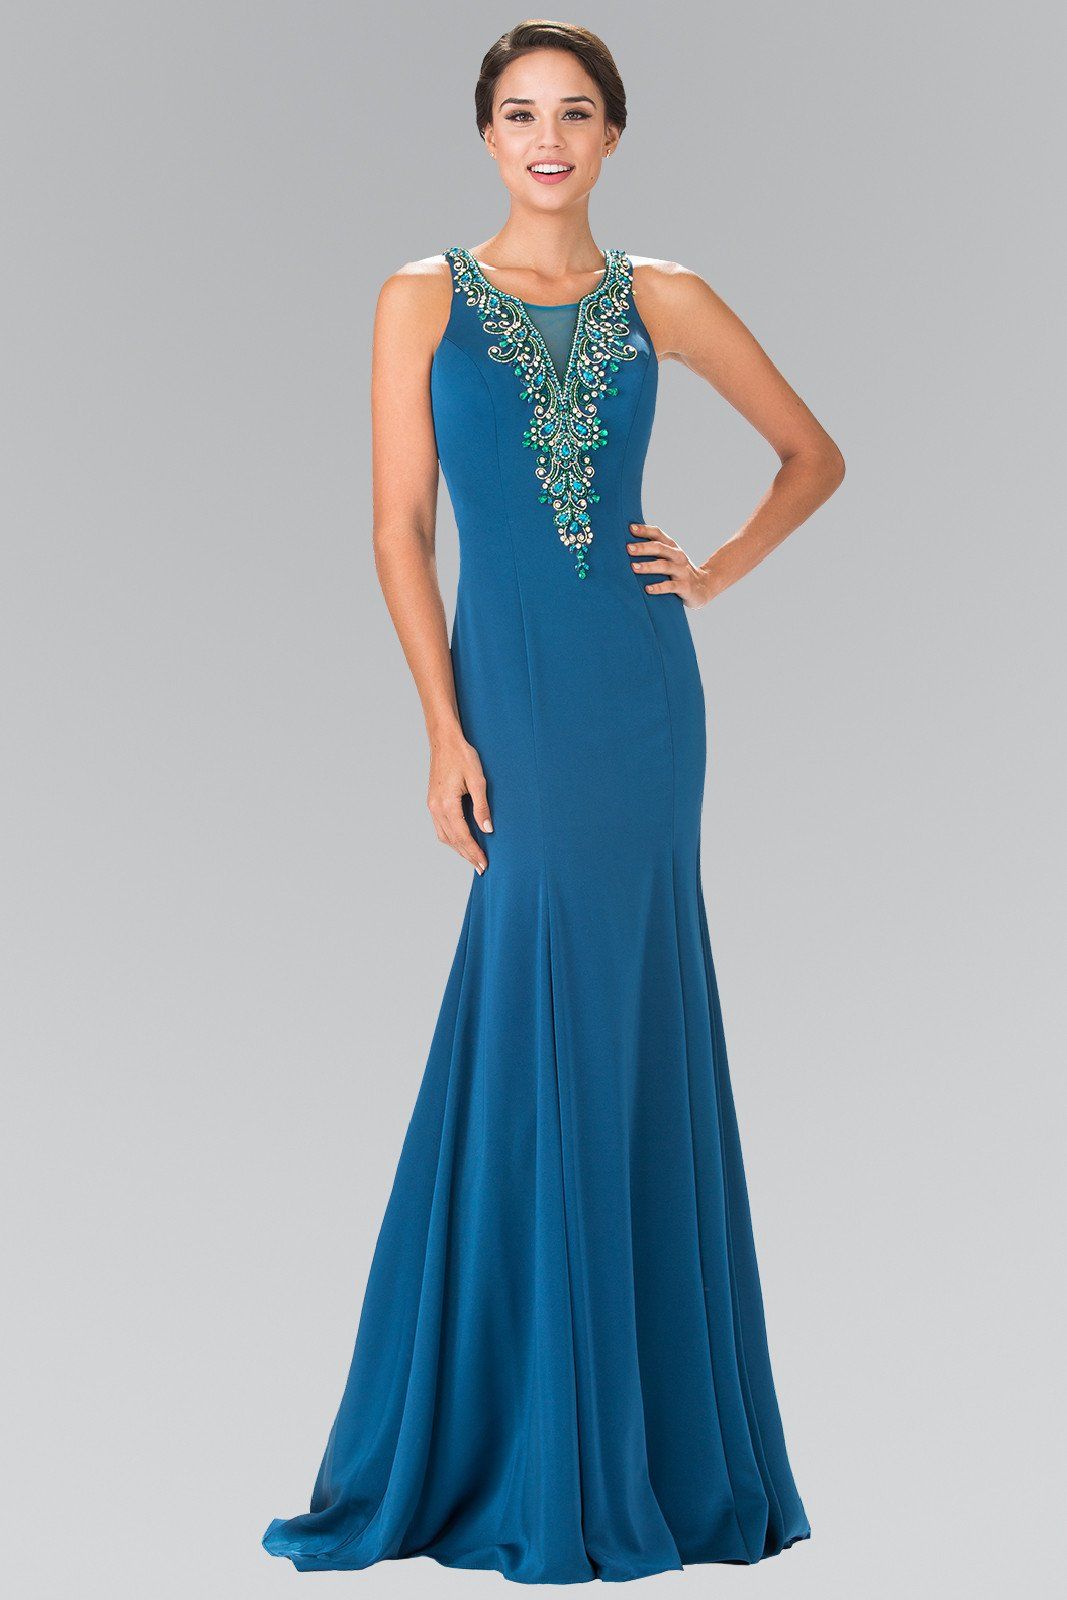 Long Beaded Illusion Jersey Dress by Elizabeth K GL2310-Long Formal Dresses-ABC Fashion